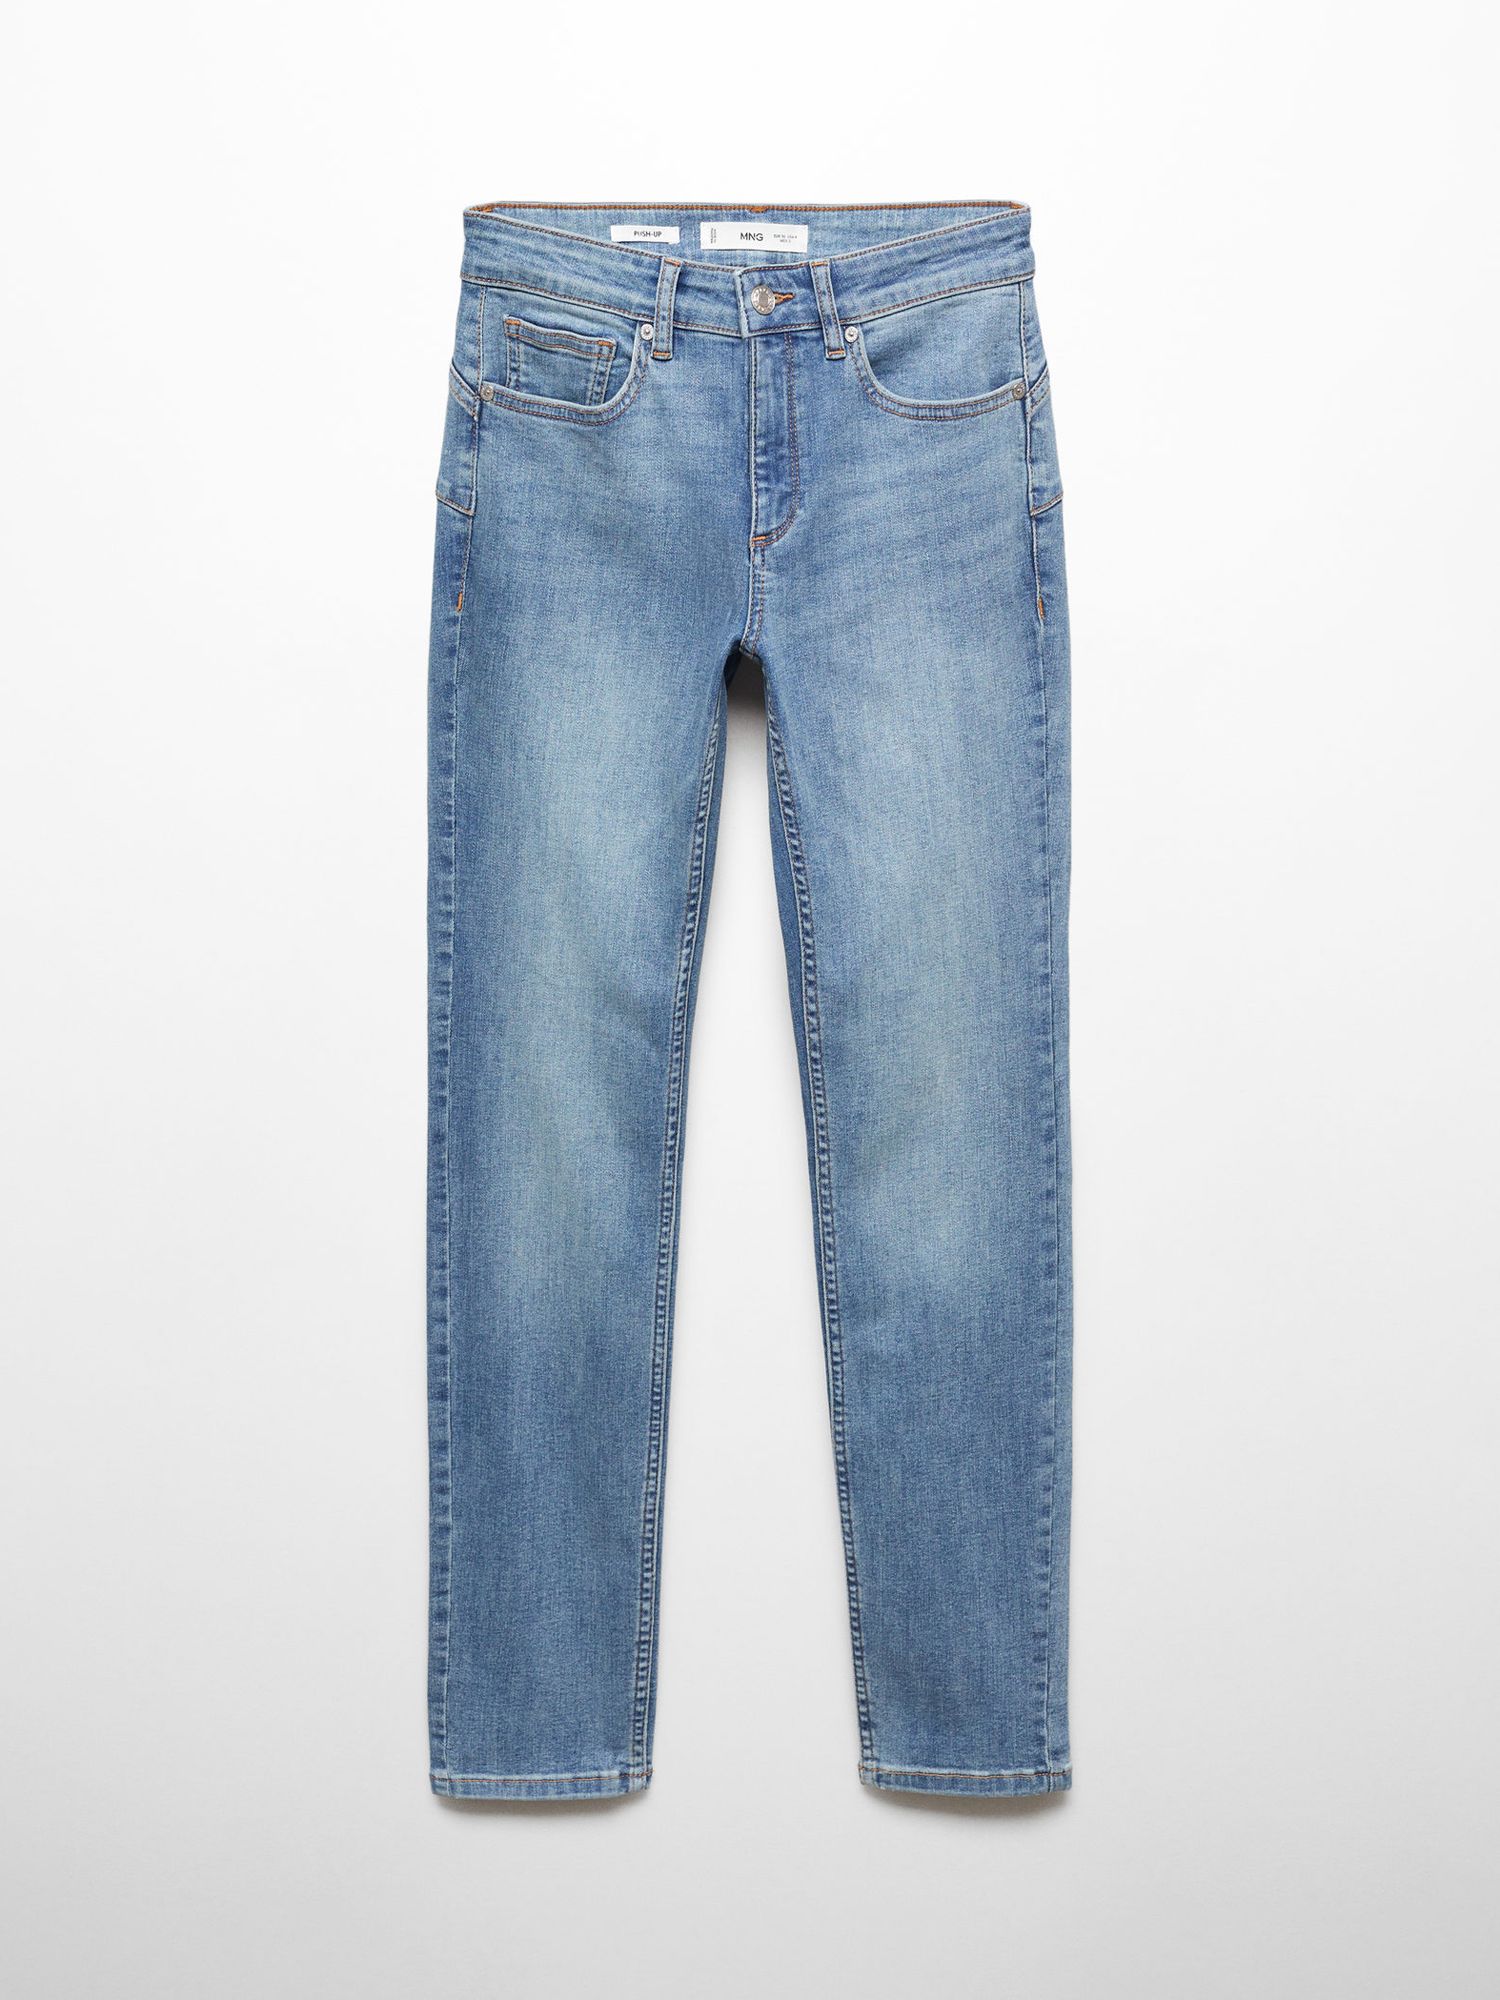 Mango Push Up Skinny Jeans, Open Blue, 20